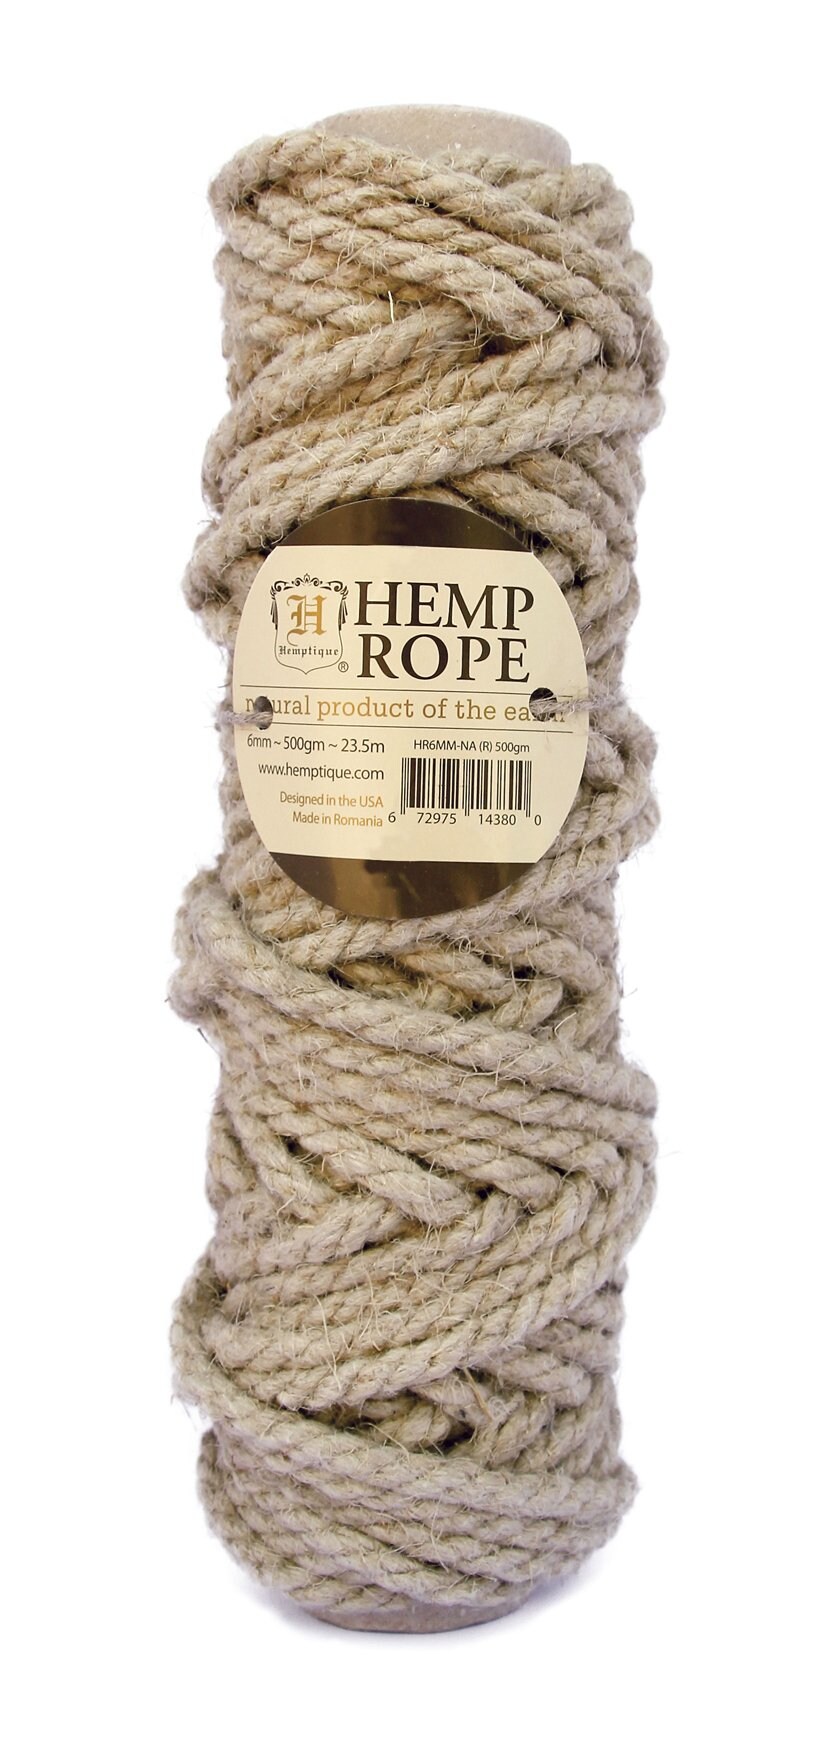 Hemp Rope Kilo Spools - Craft Rope at Hemptique